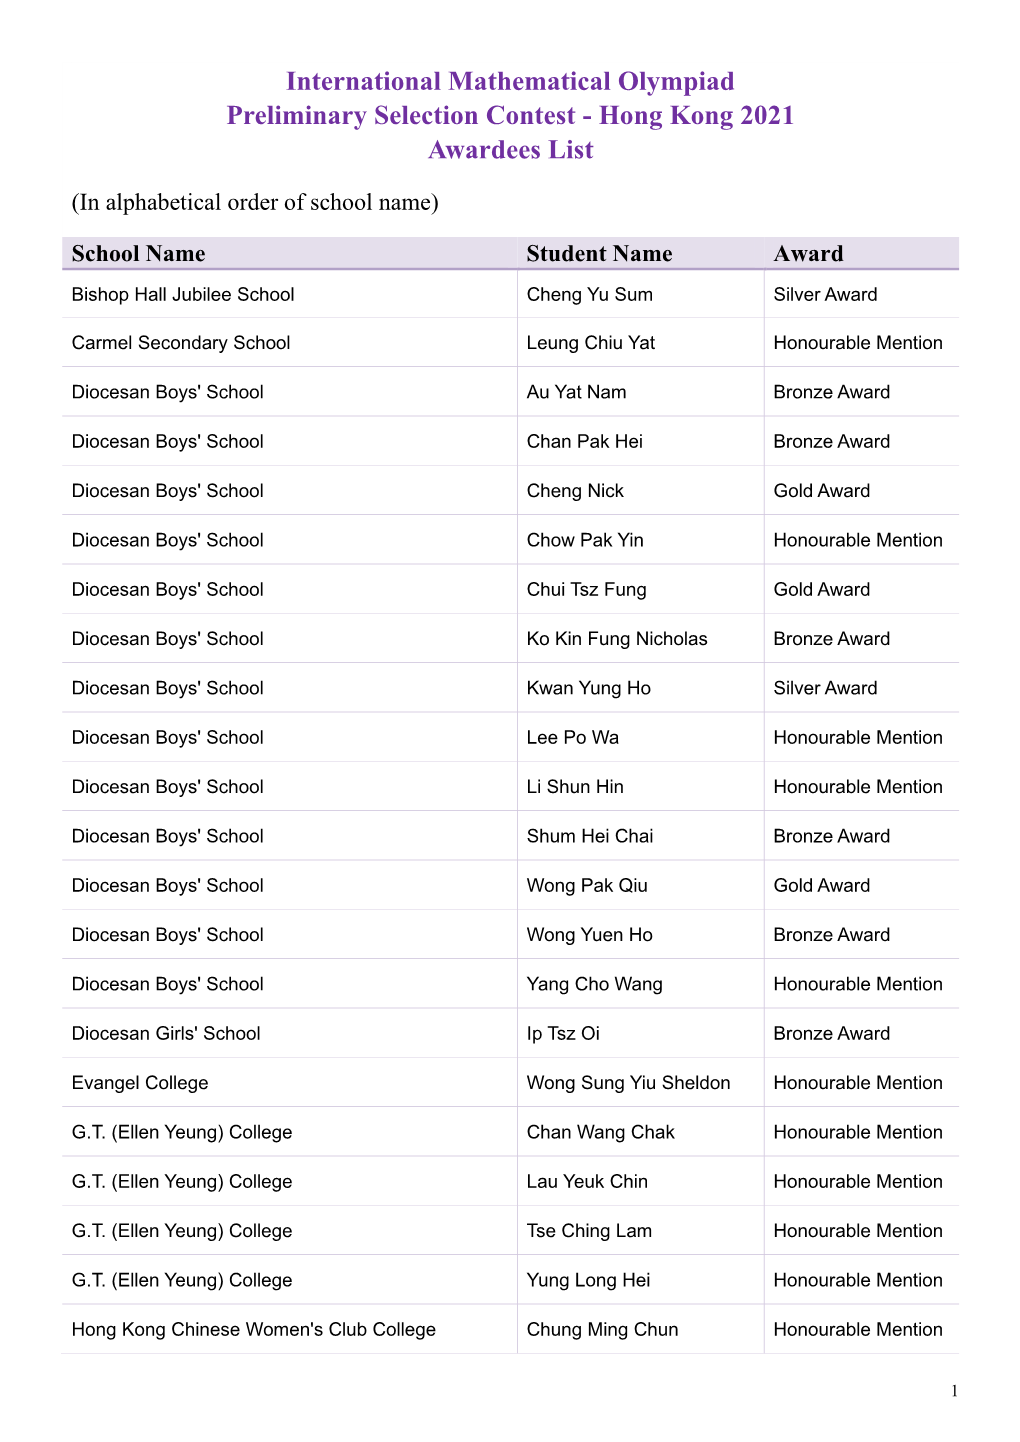 International Mathematical Olympiad Preliminary Selection Contest - Hong Kong 2021 Awardees List